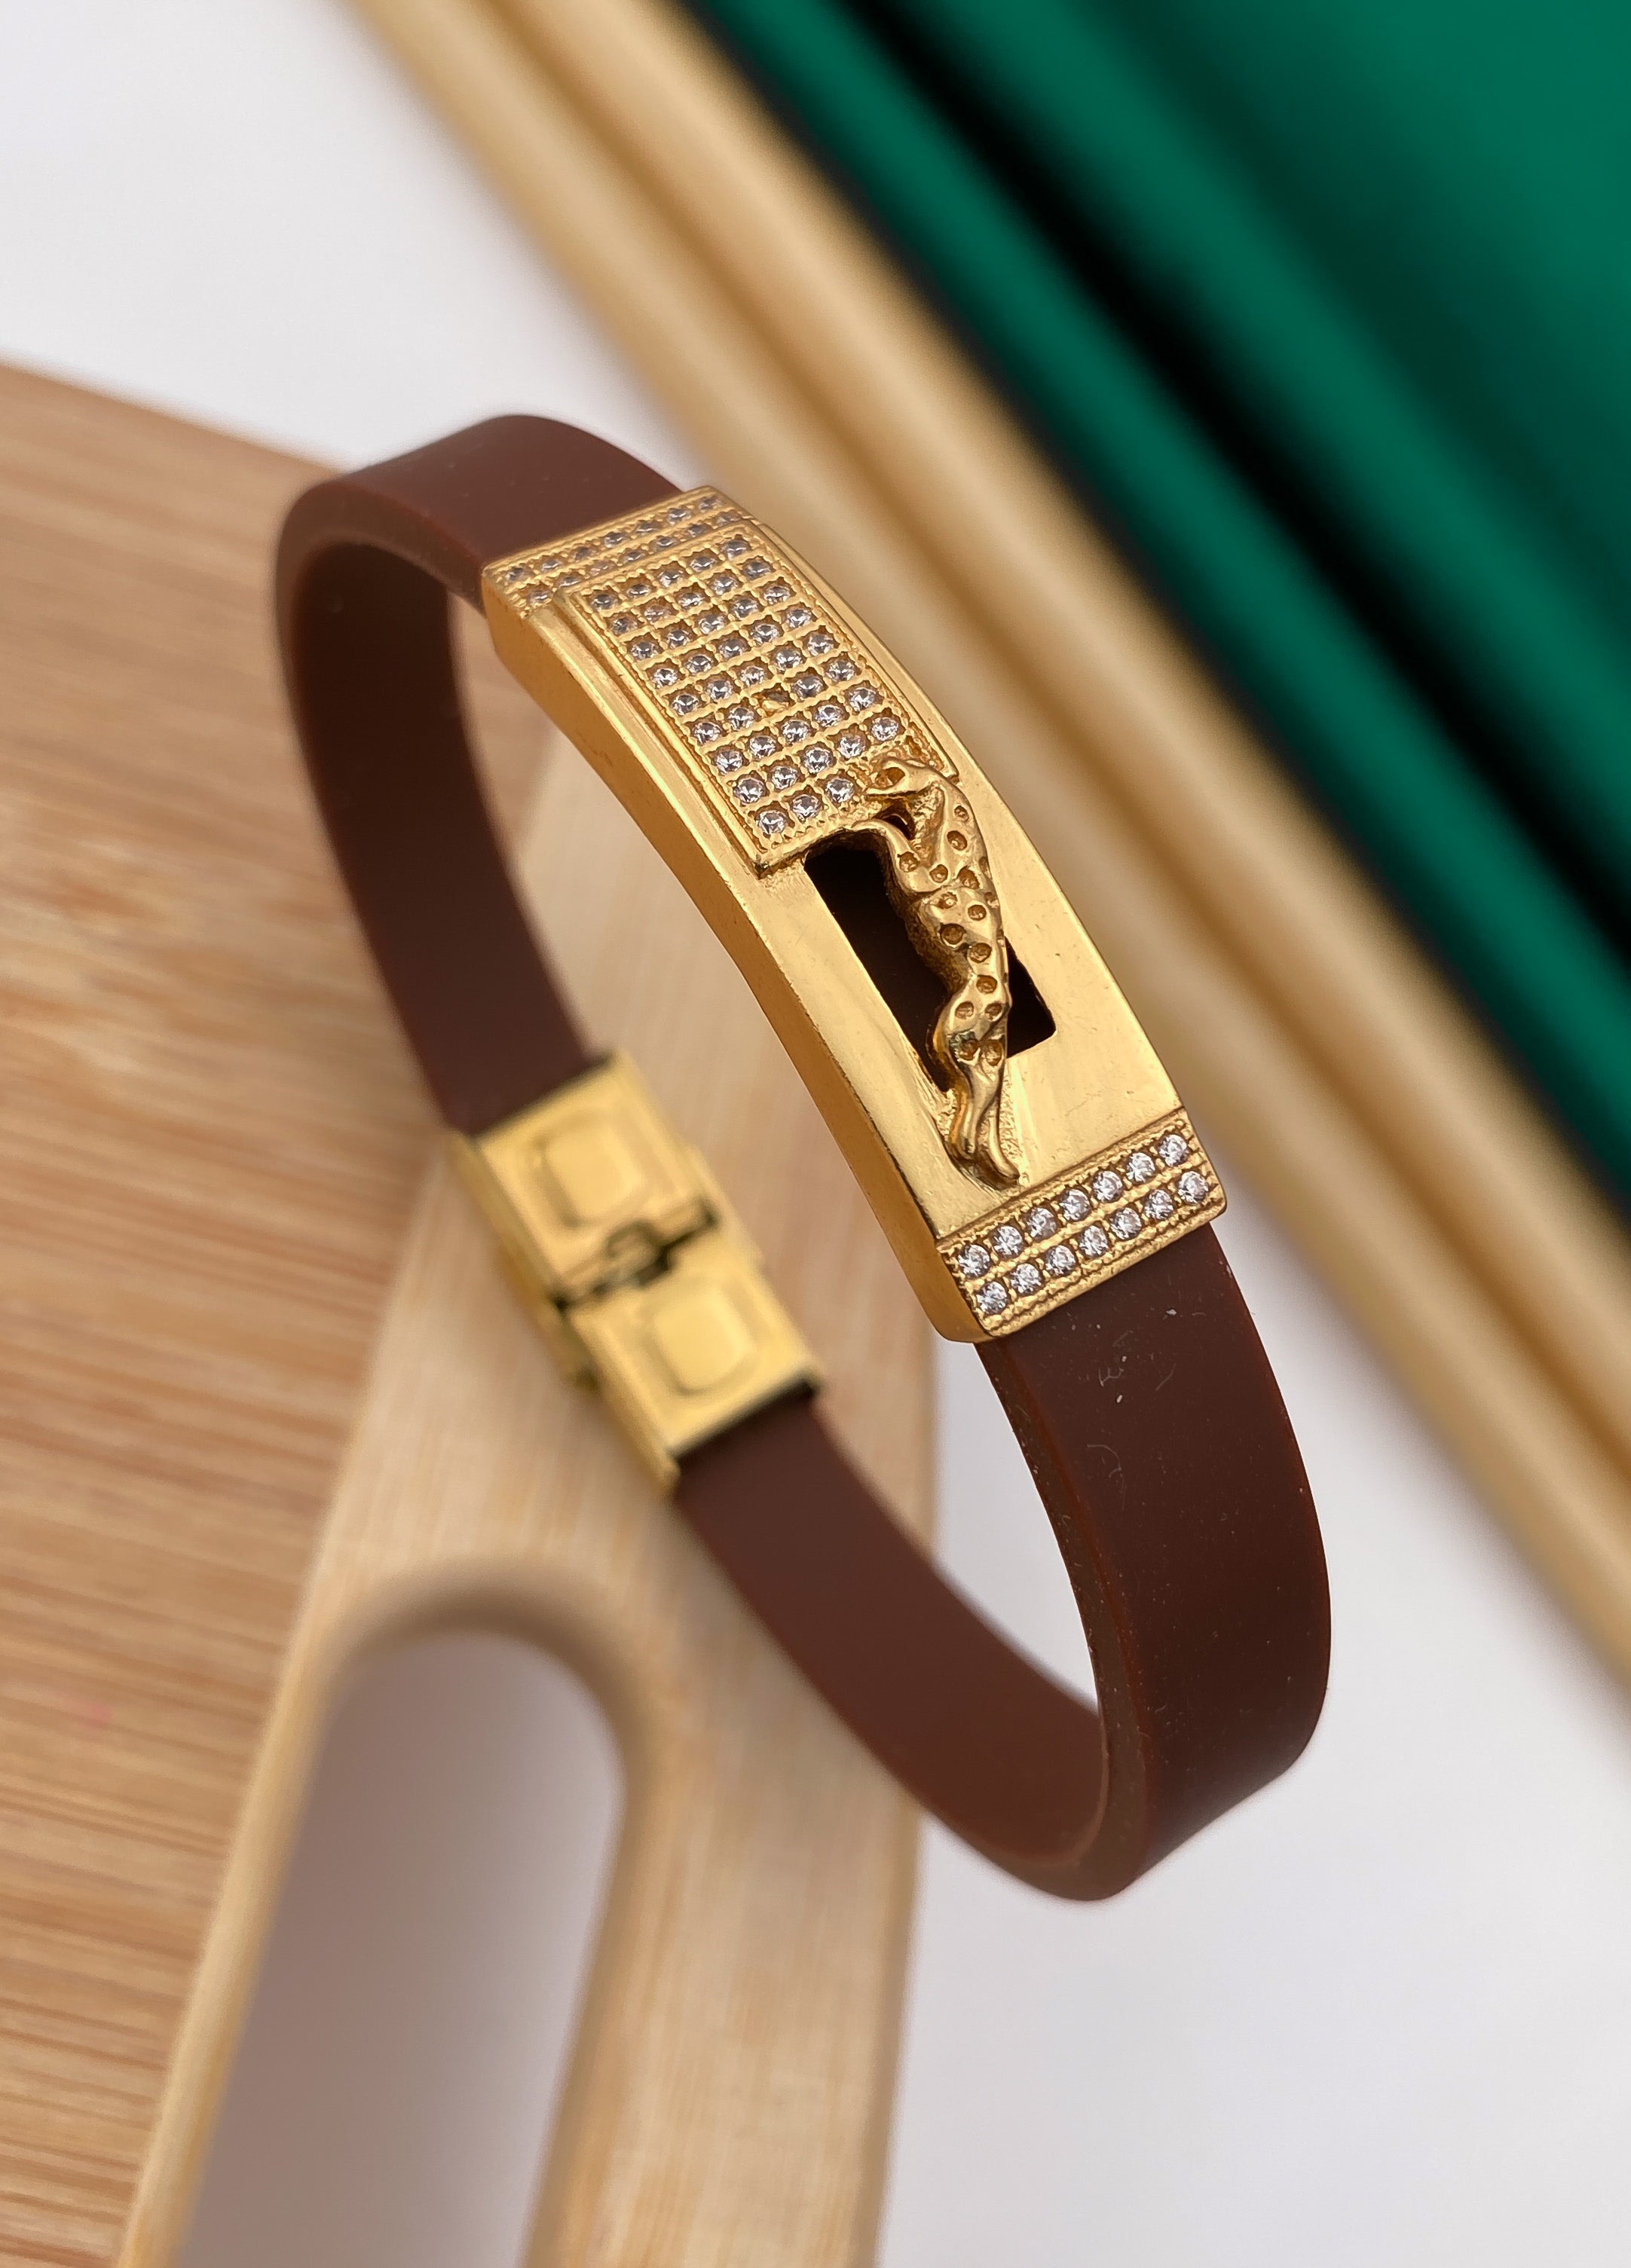 18K Gold Men's Jaguar Design Bracelet | Pachchigar Jewellers (Ashokbhai)